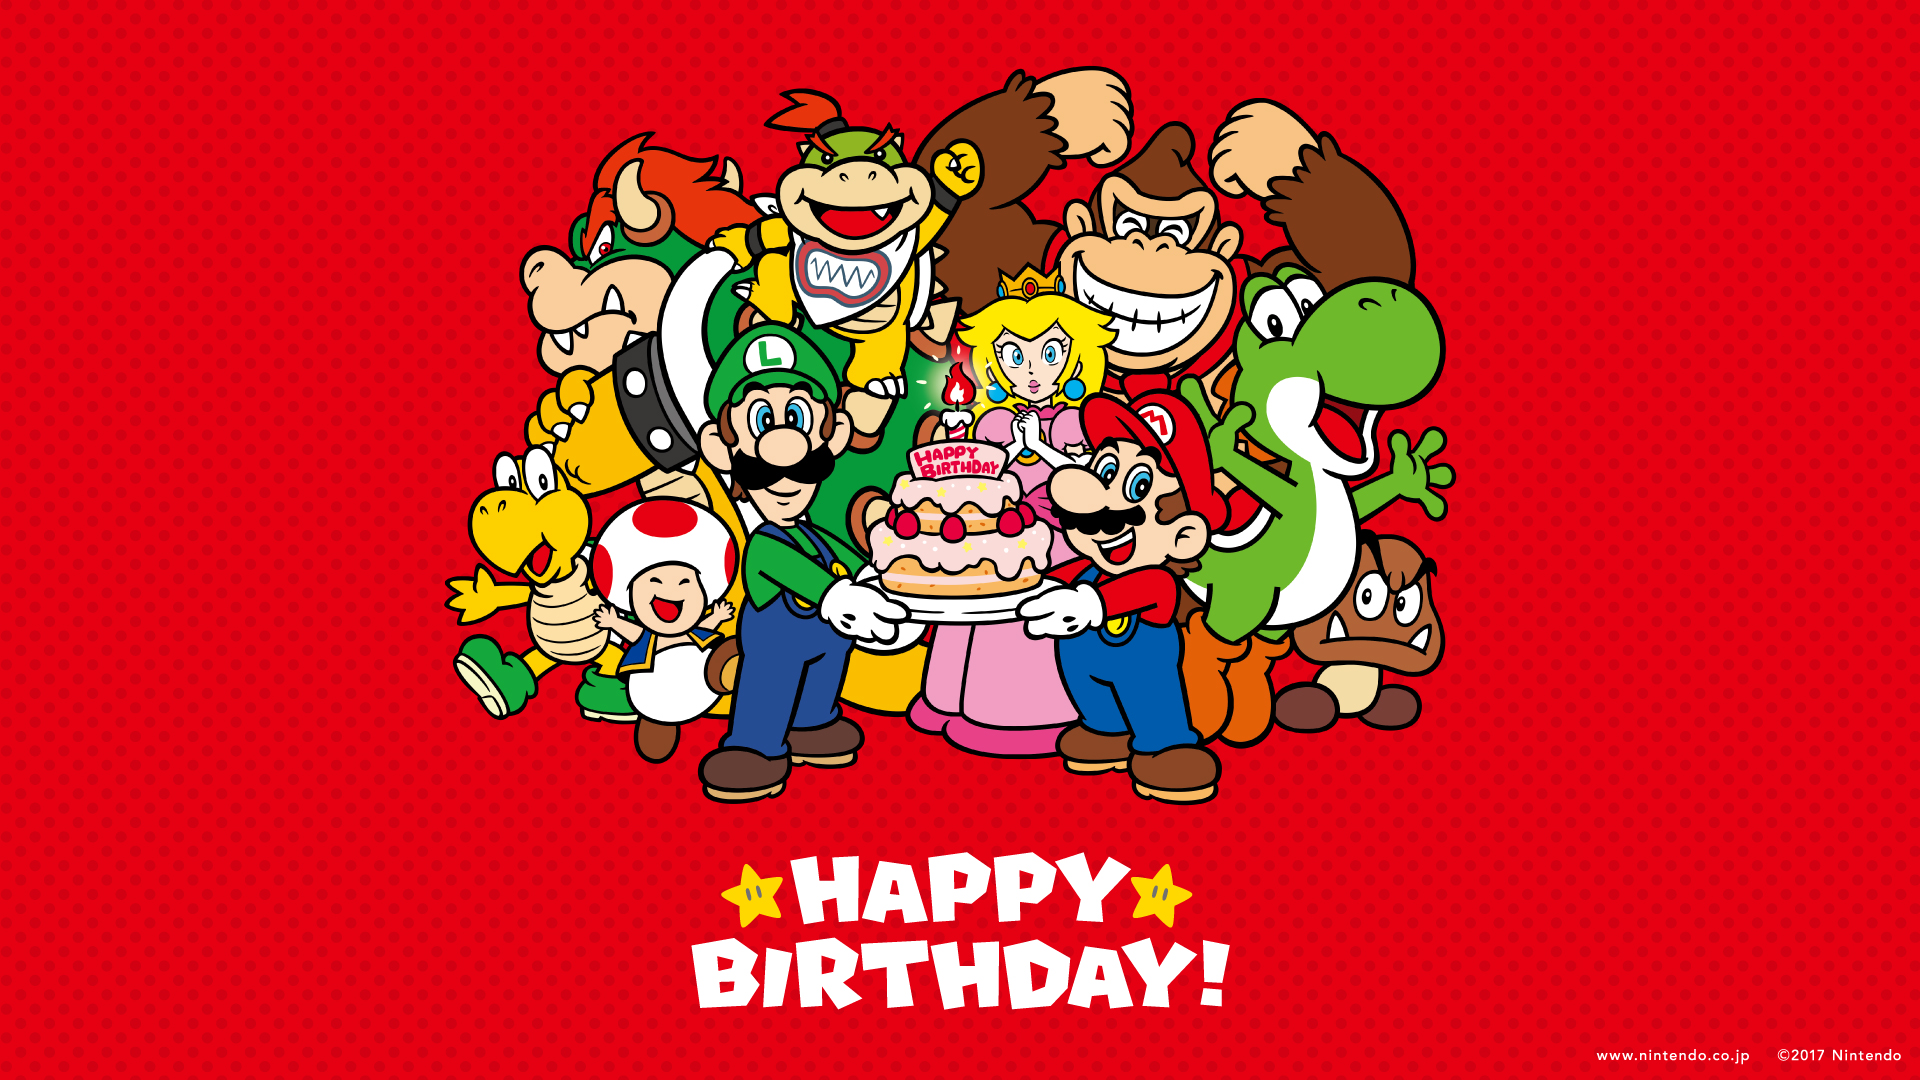 Nintendo Releases Super Mario Happy Birthday Wallpapers The